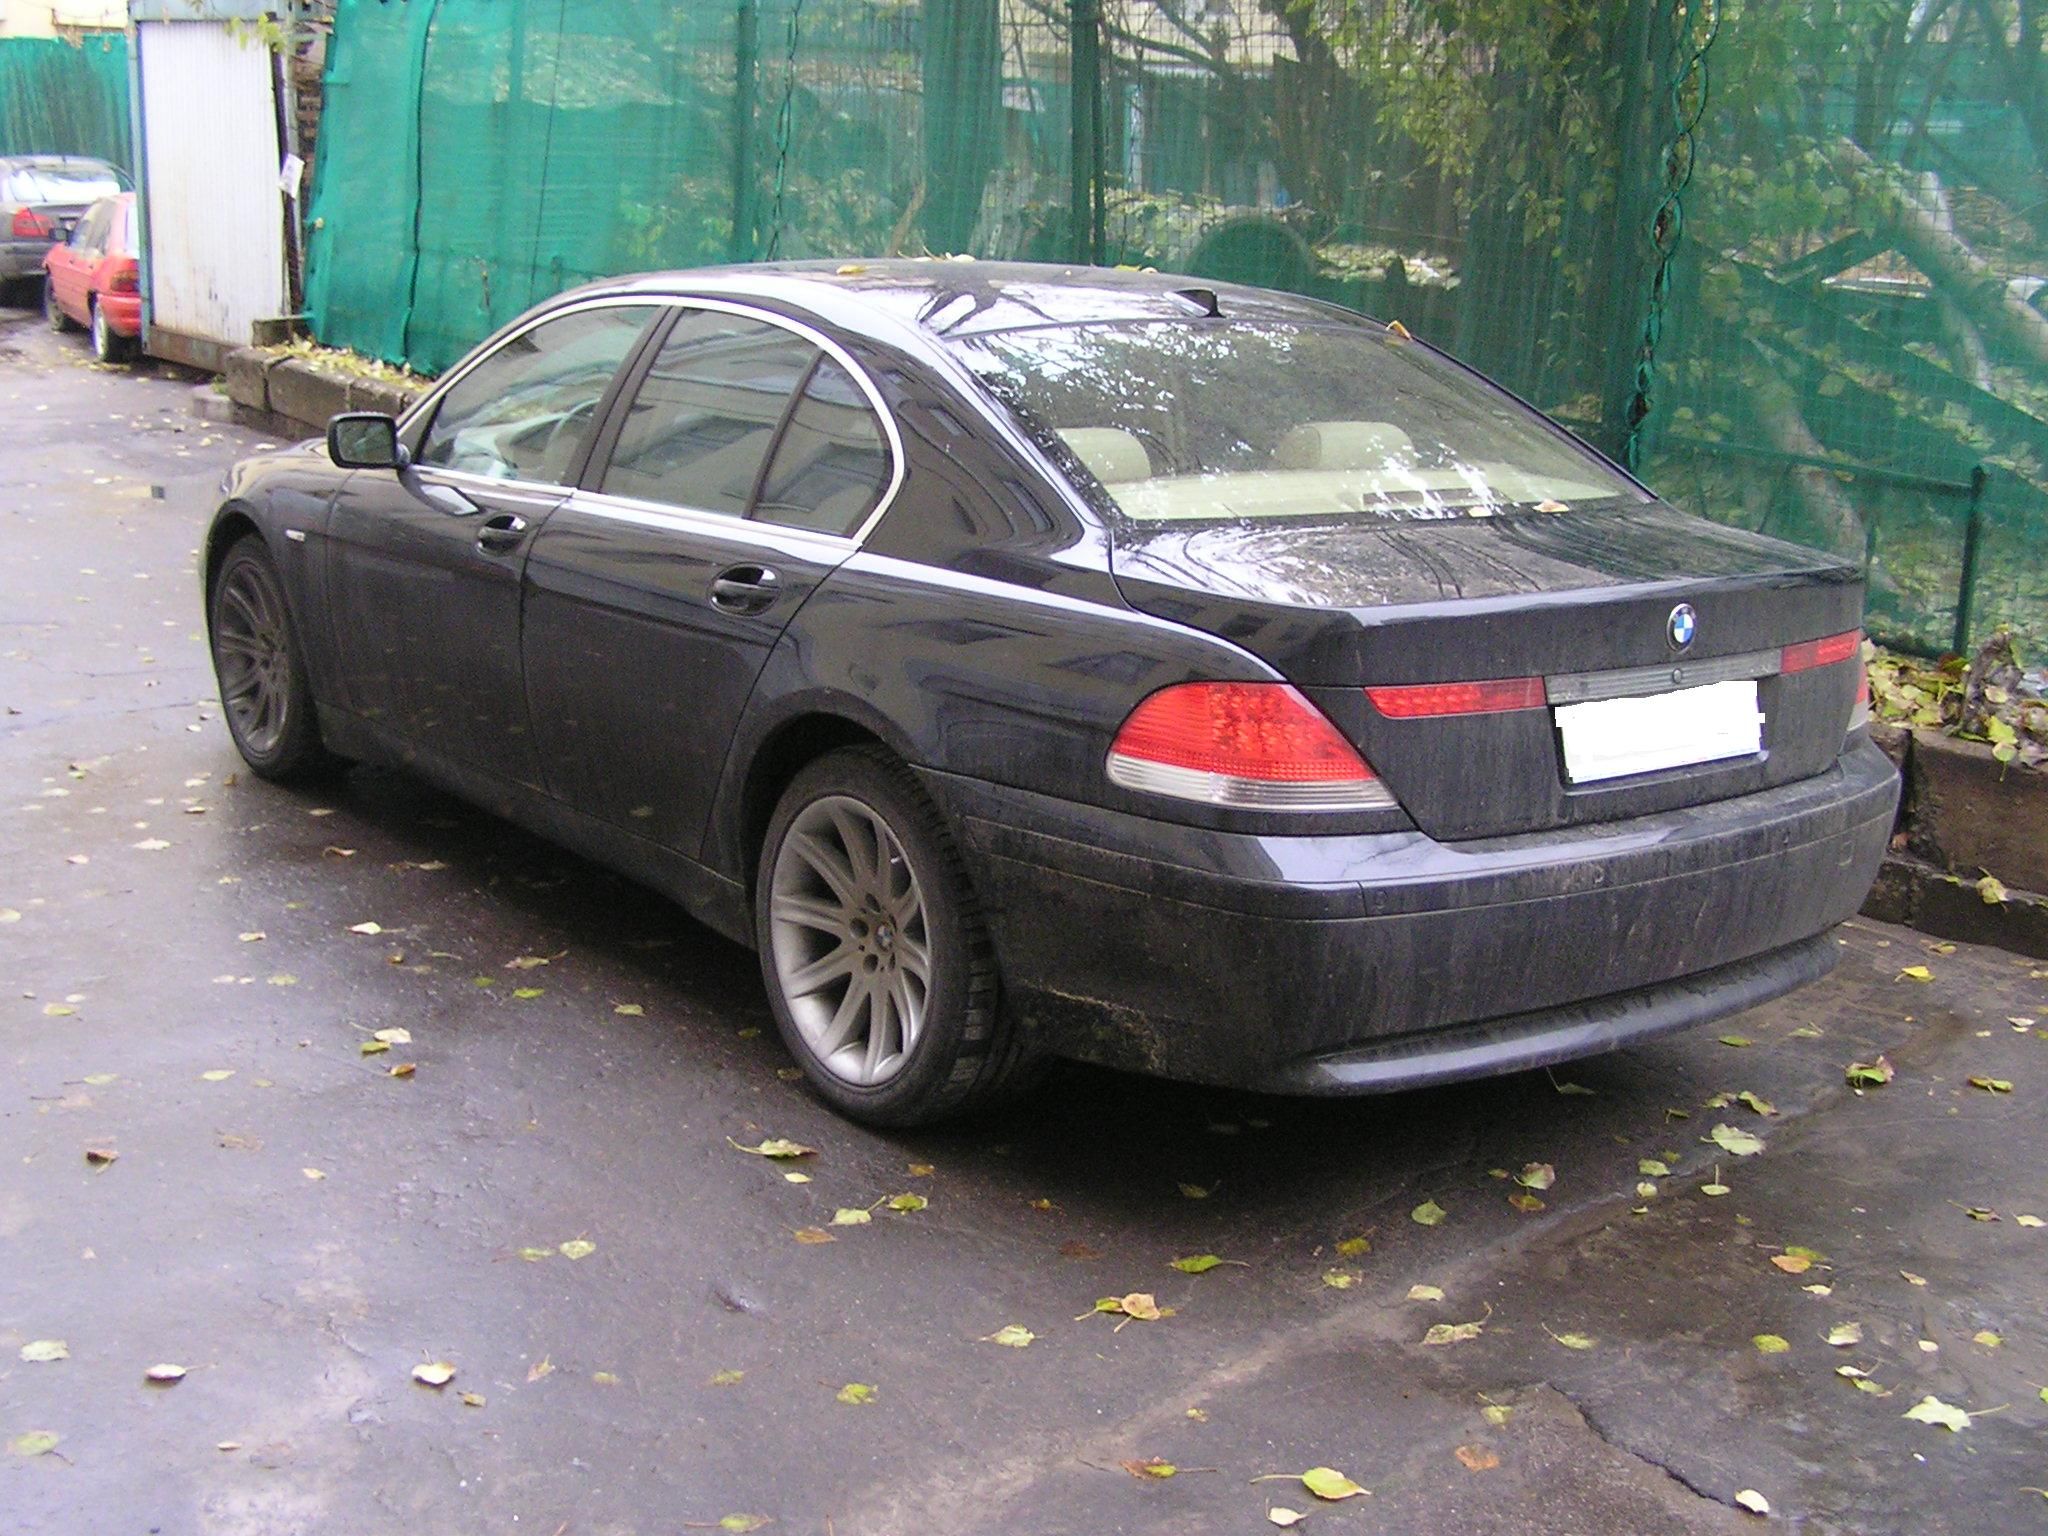 2002 BMW 745